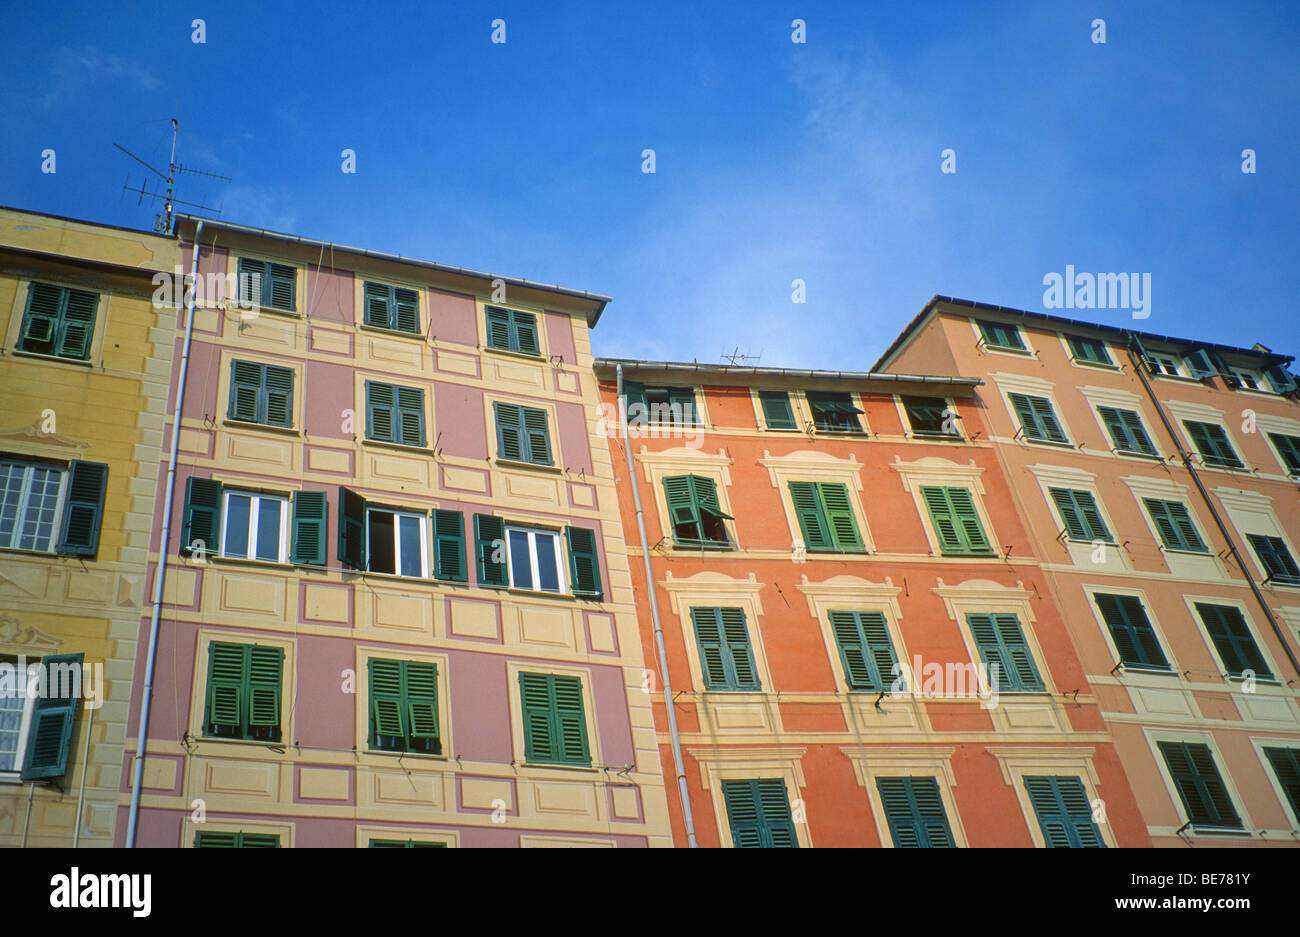 House fronts, Camogli, Liguria, Italy, Europe Stock Photo